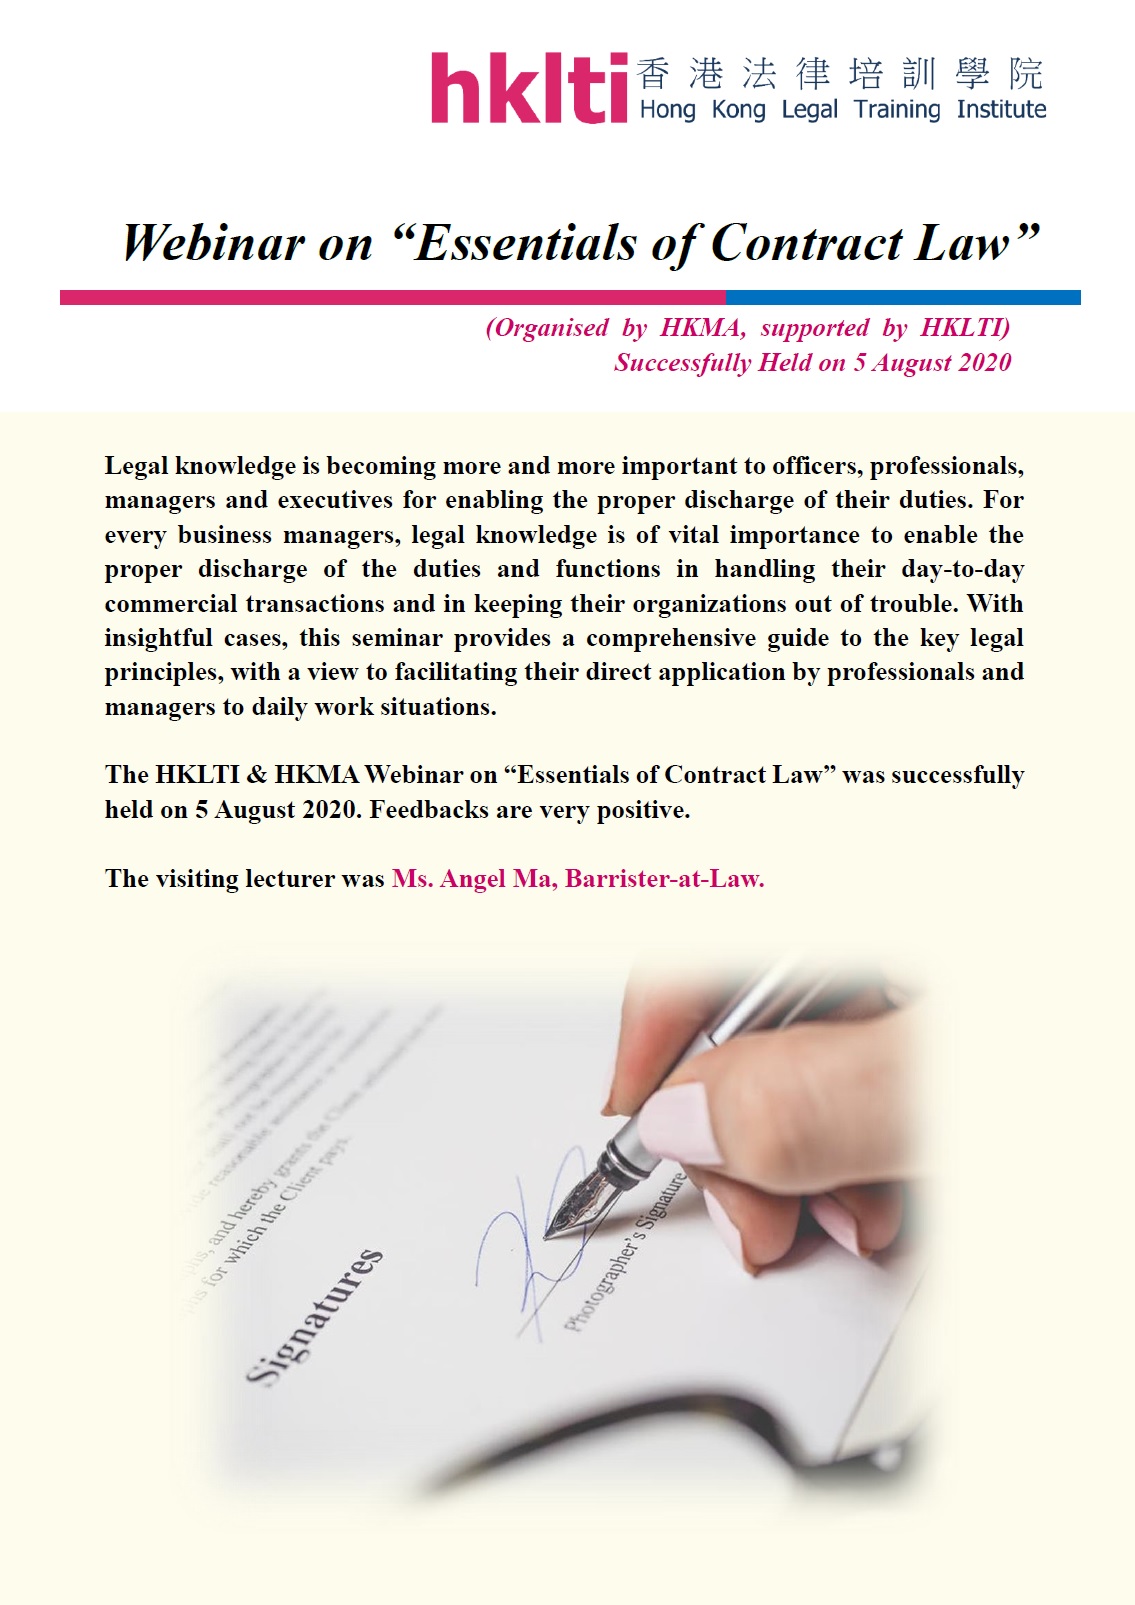 hklti essentials of contract law seminar report 20200805